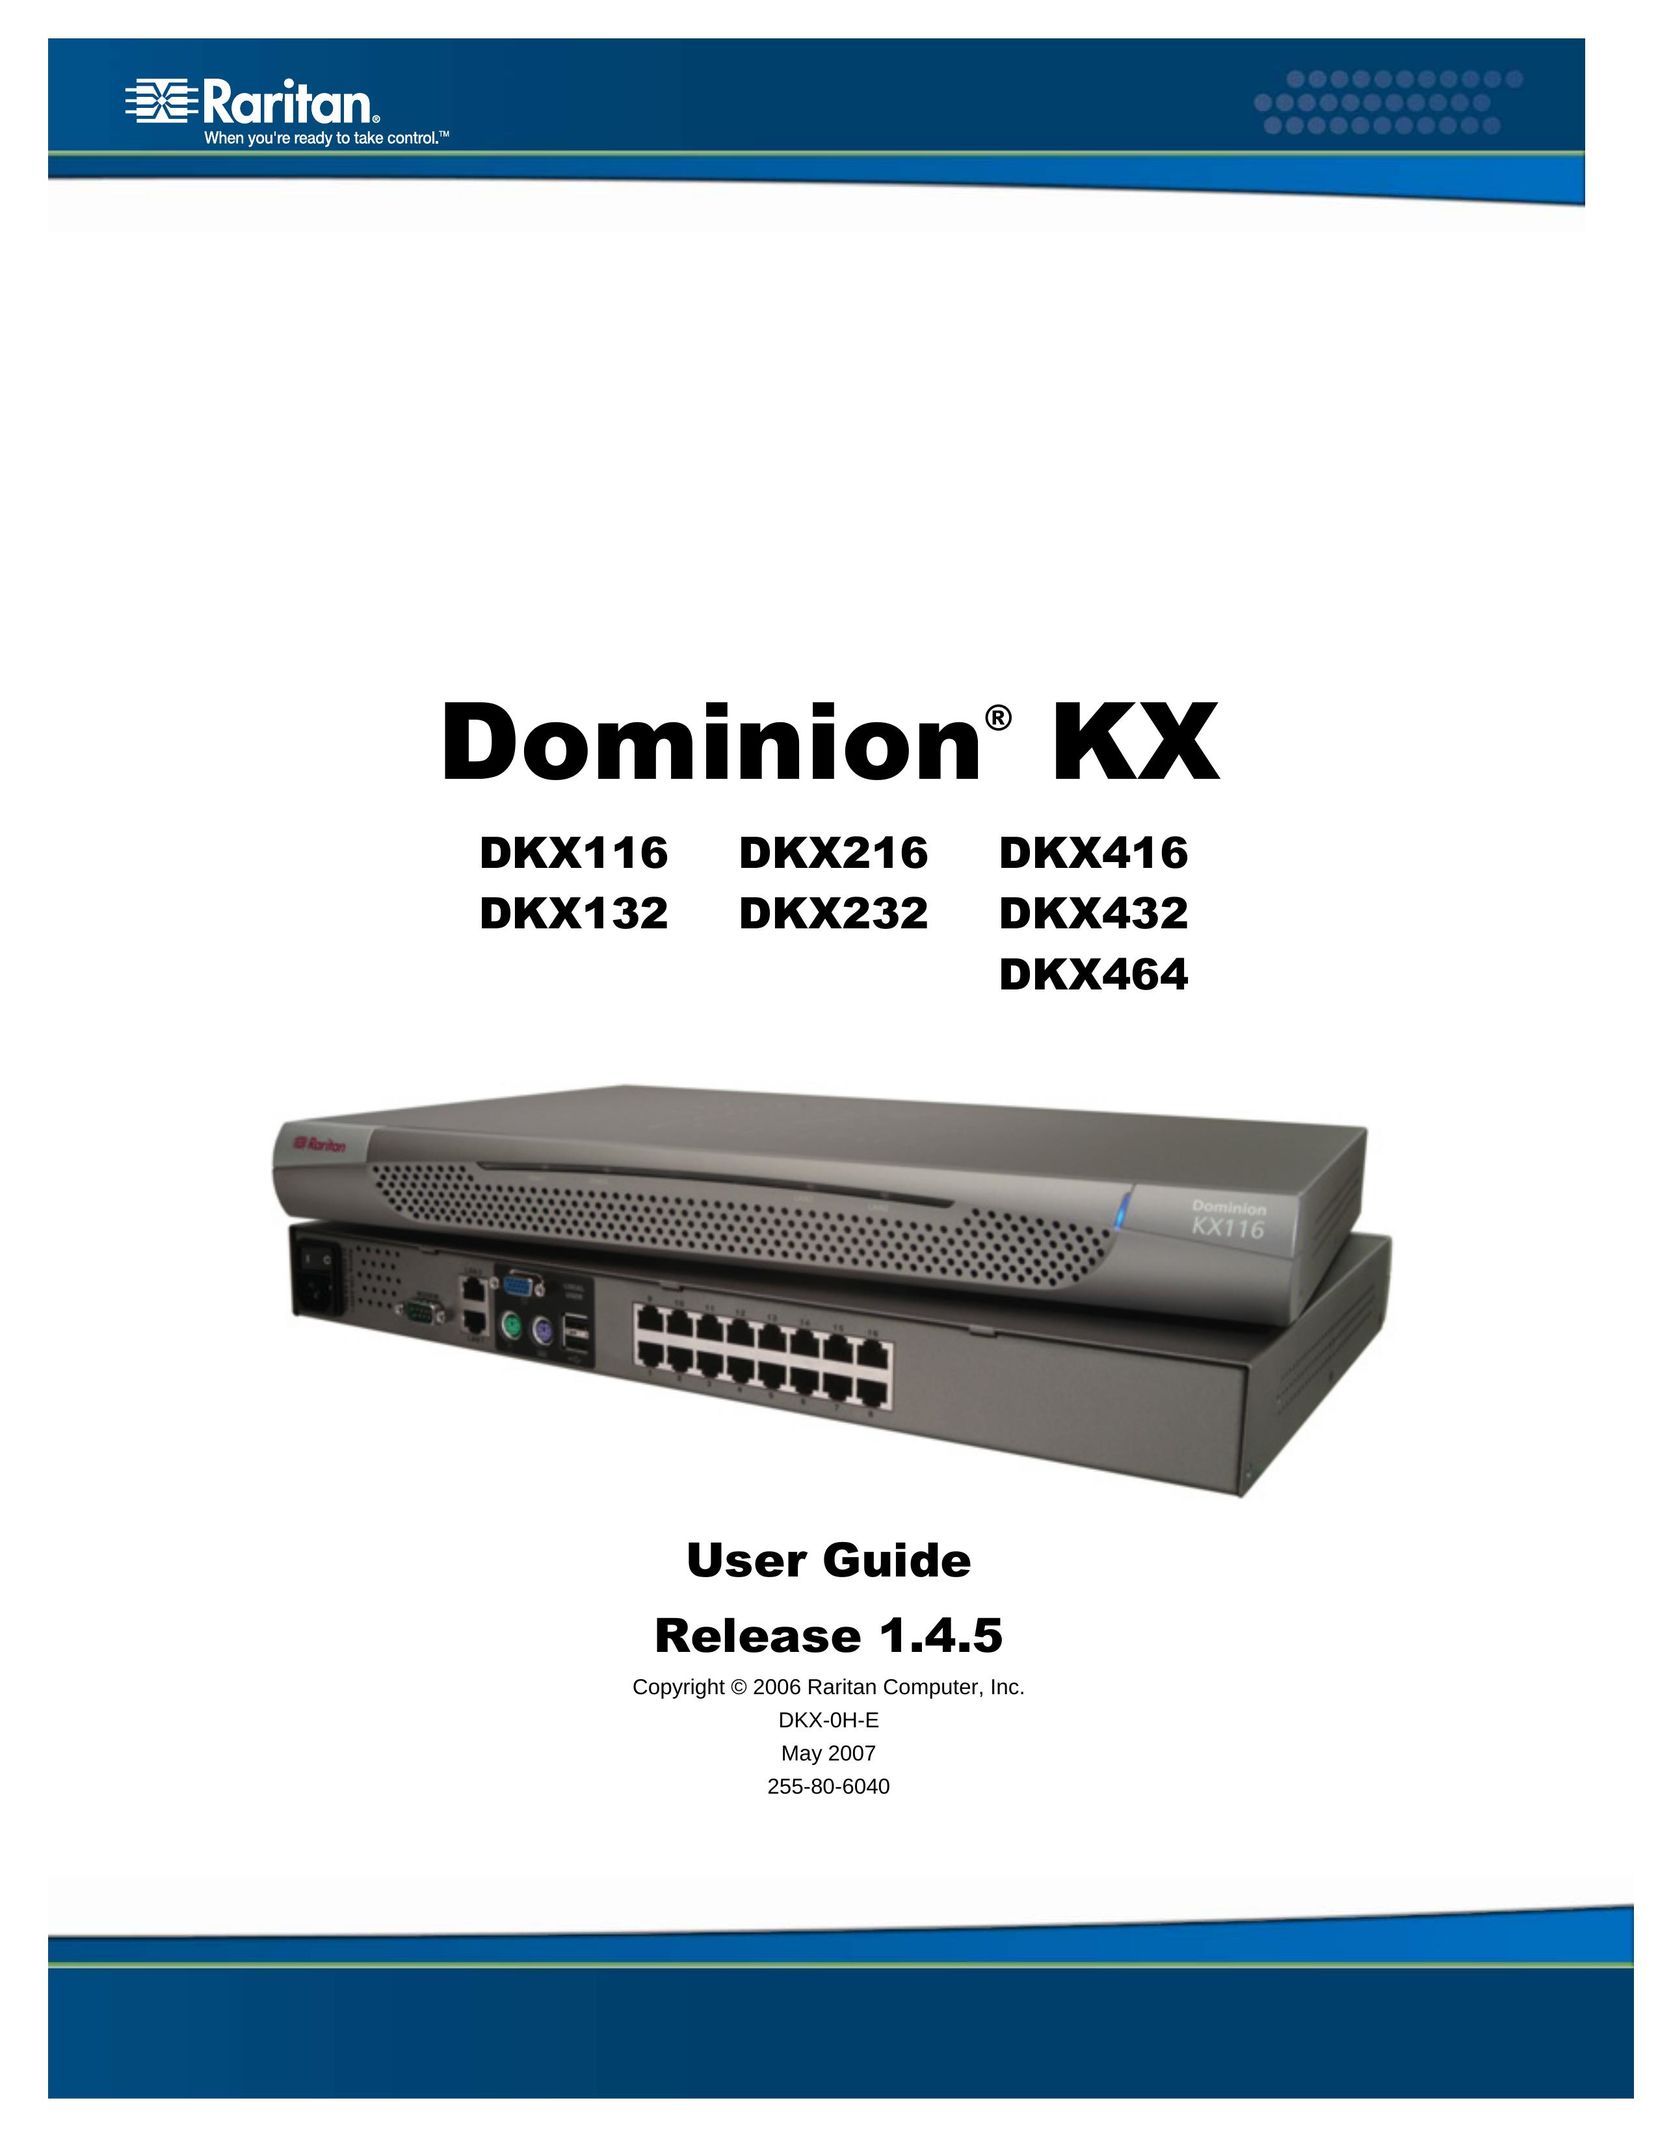 Raritan Computer DKX216 Network Router User Manual